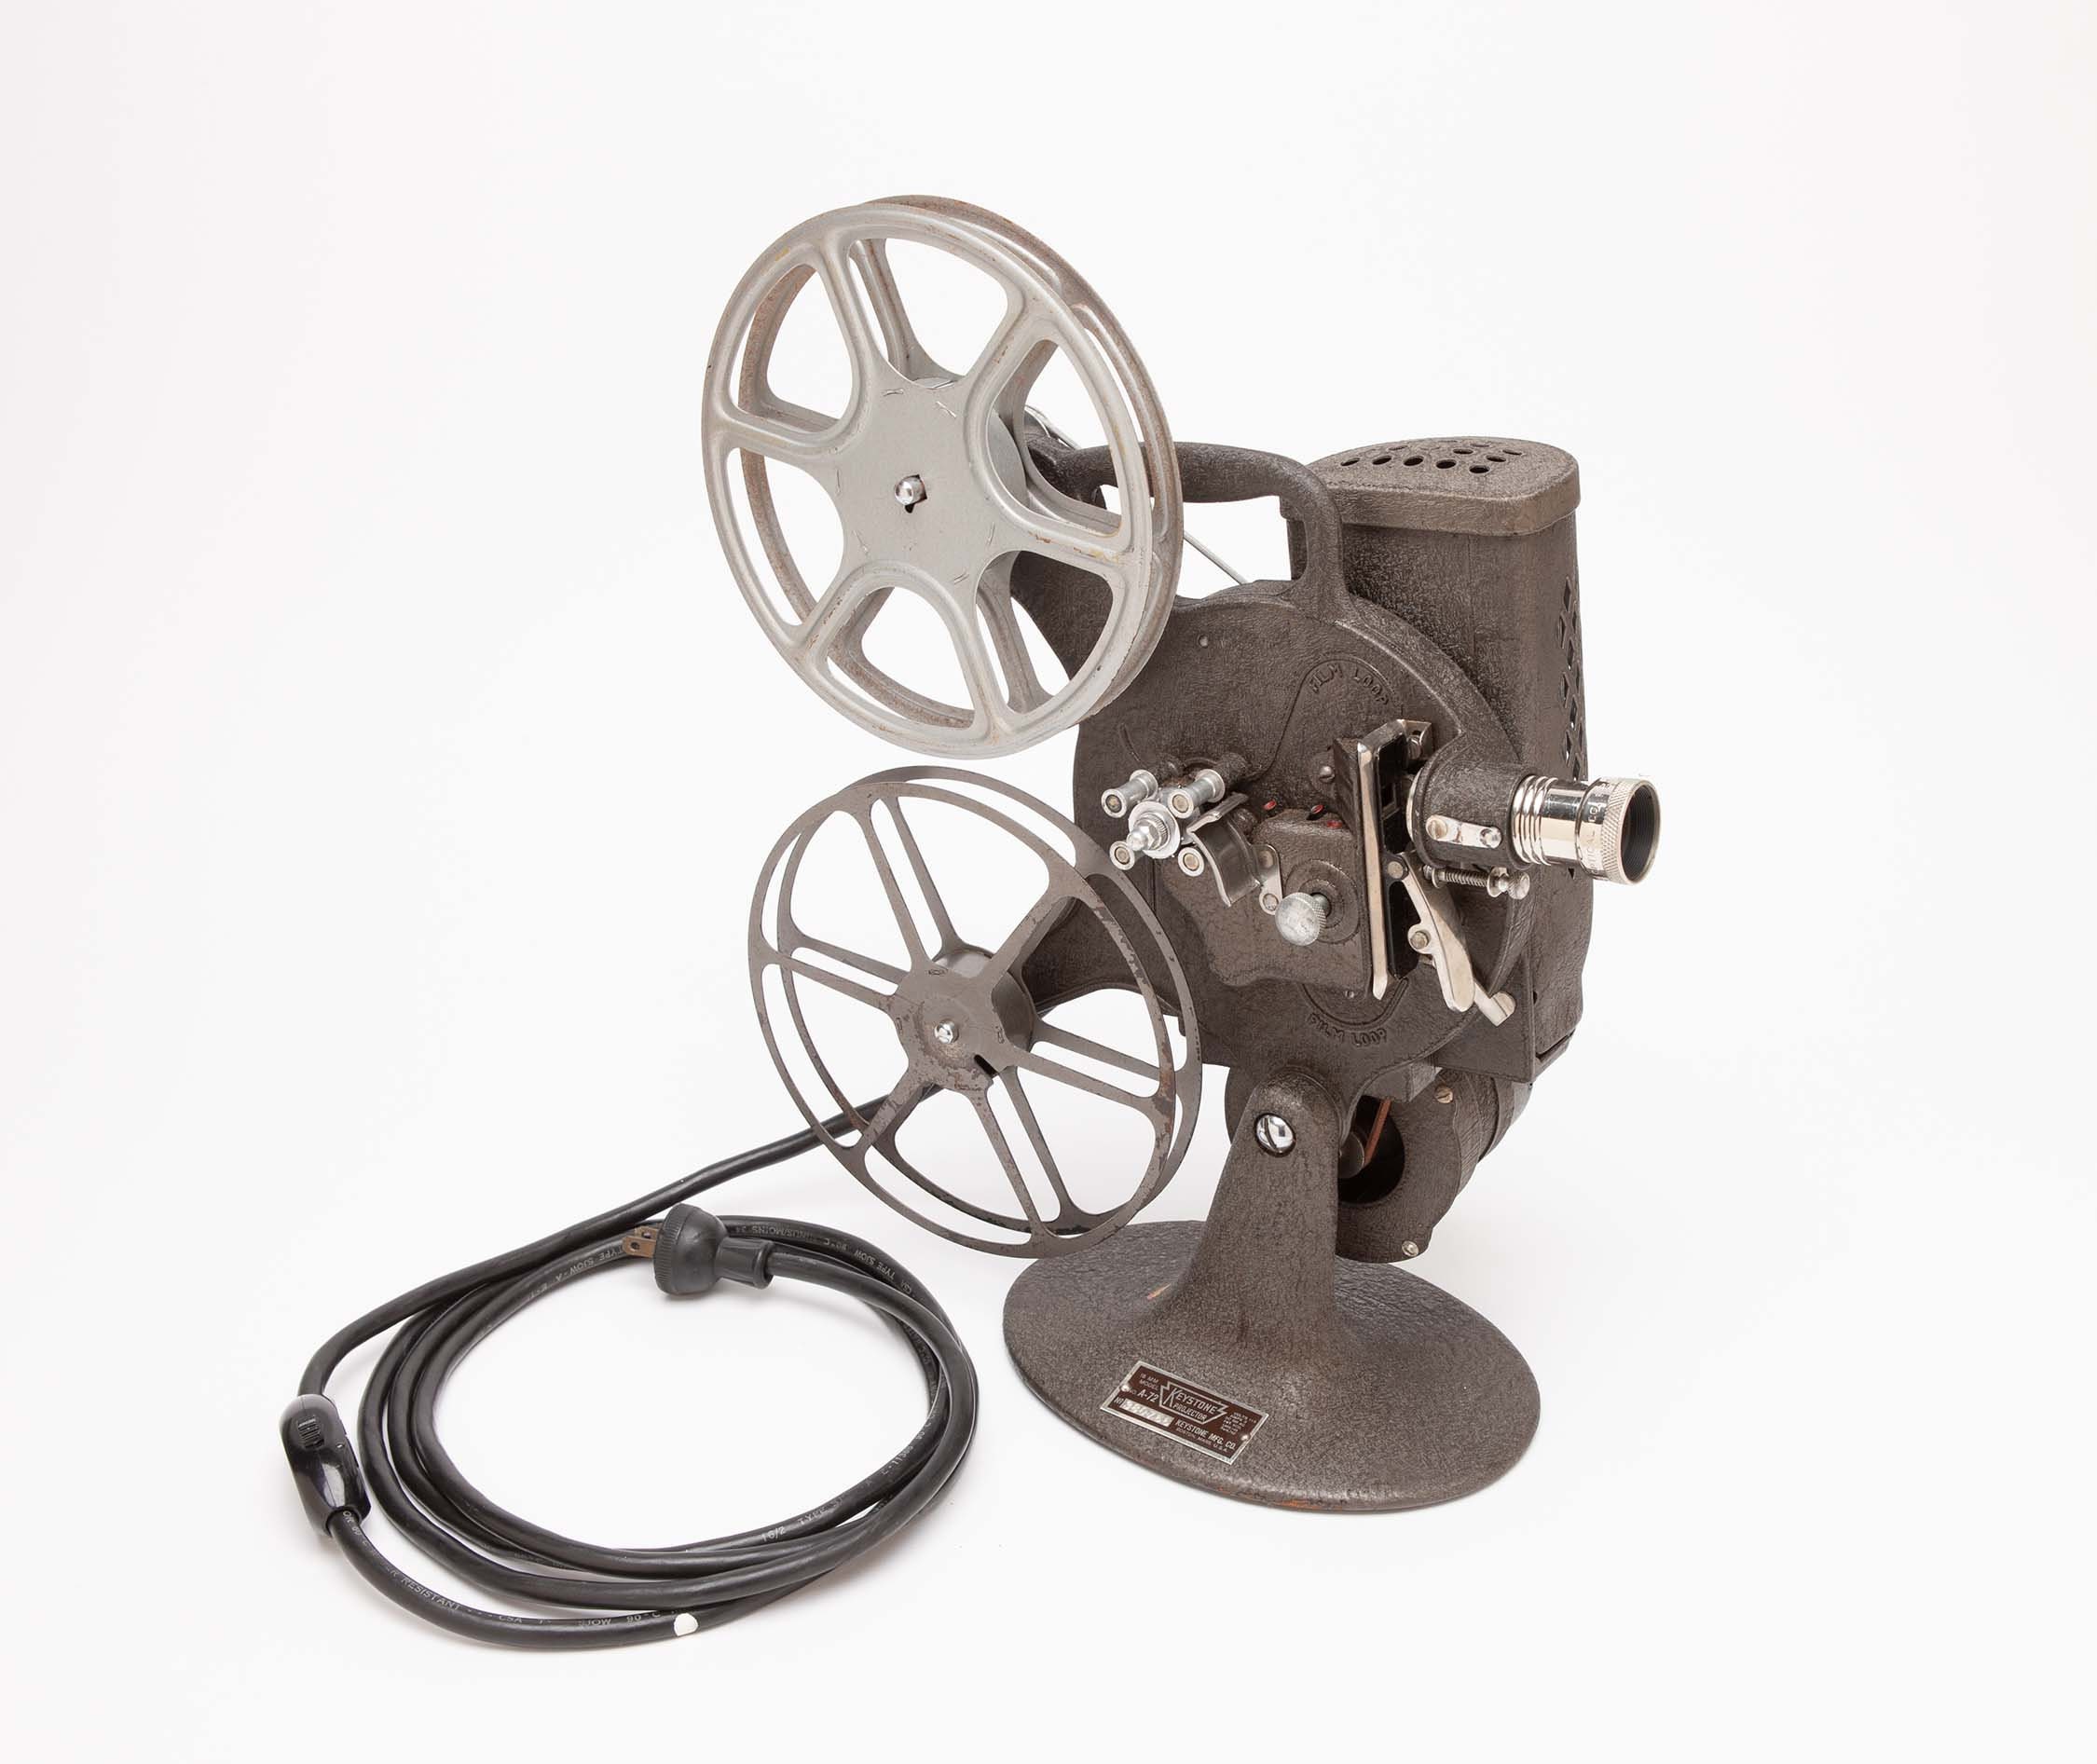 KEYSTONE A72 PROJECTOR 1940's 16mm Projector Mechanical